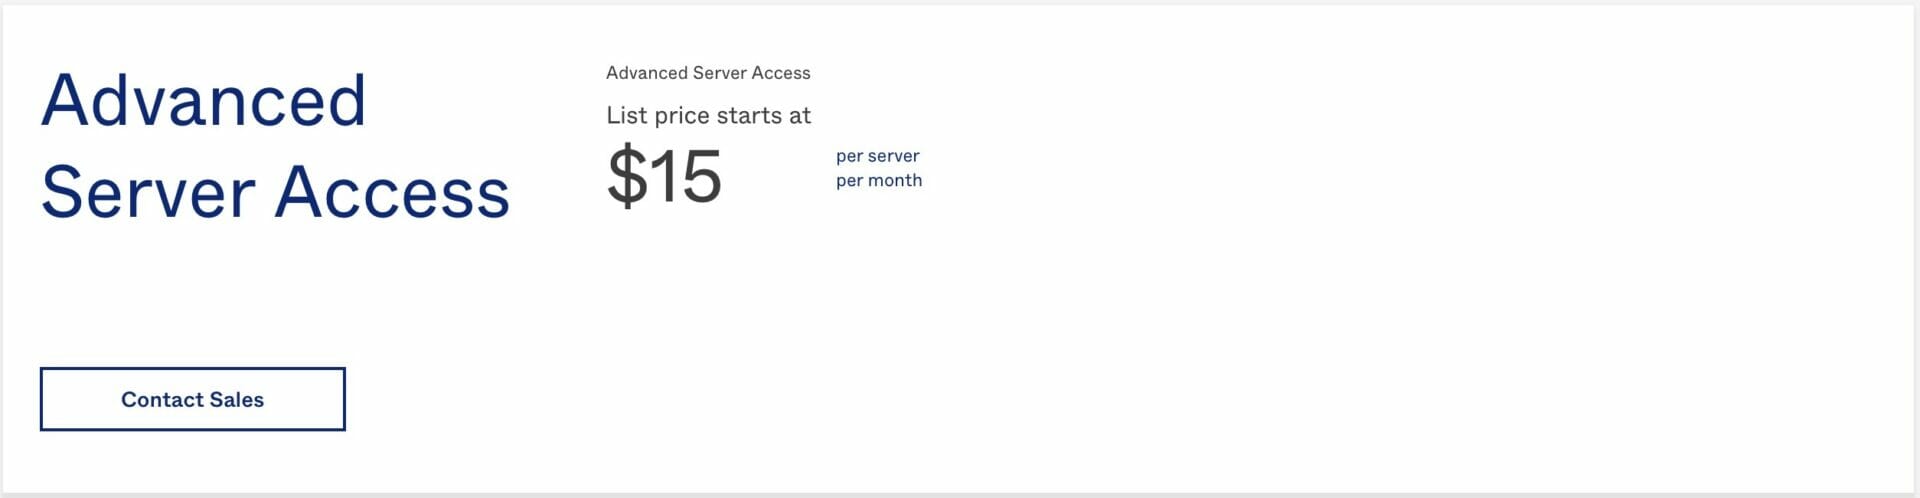 Okta Advanced Server Access Pricing